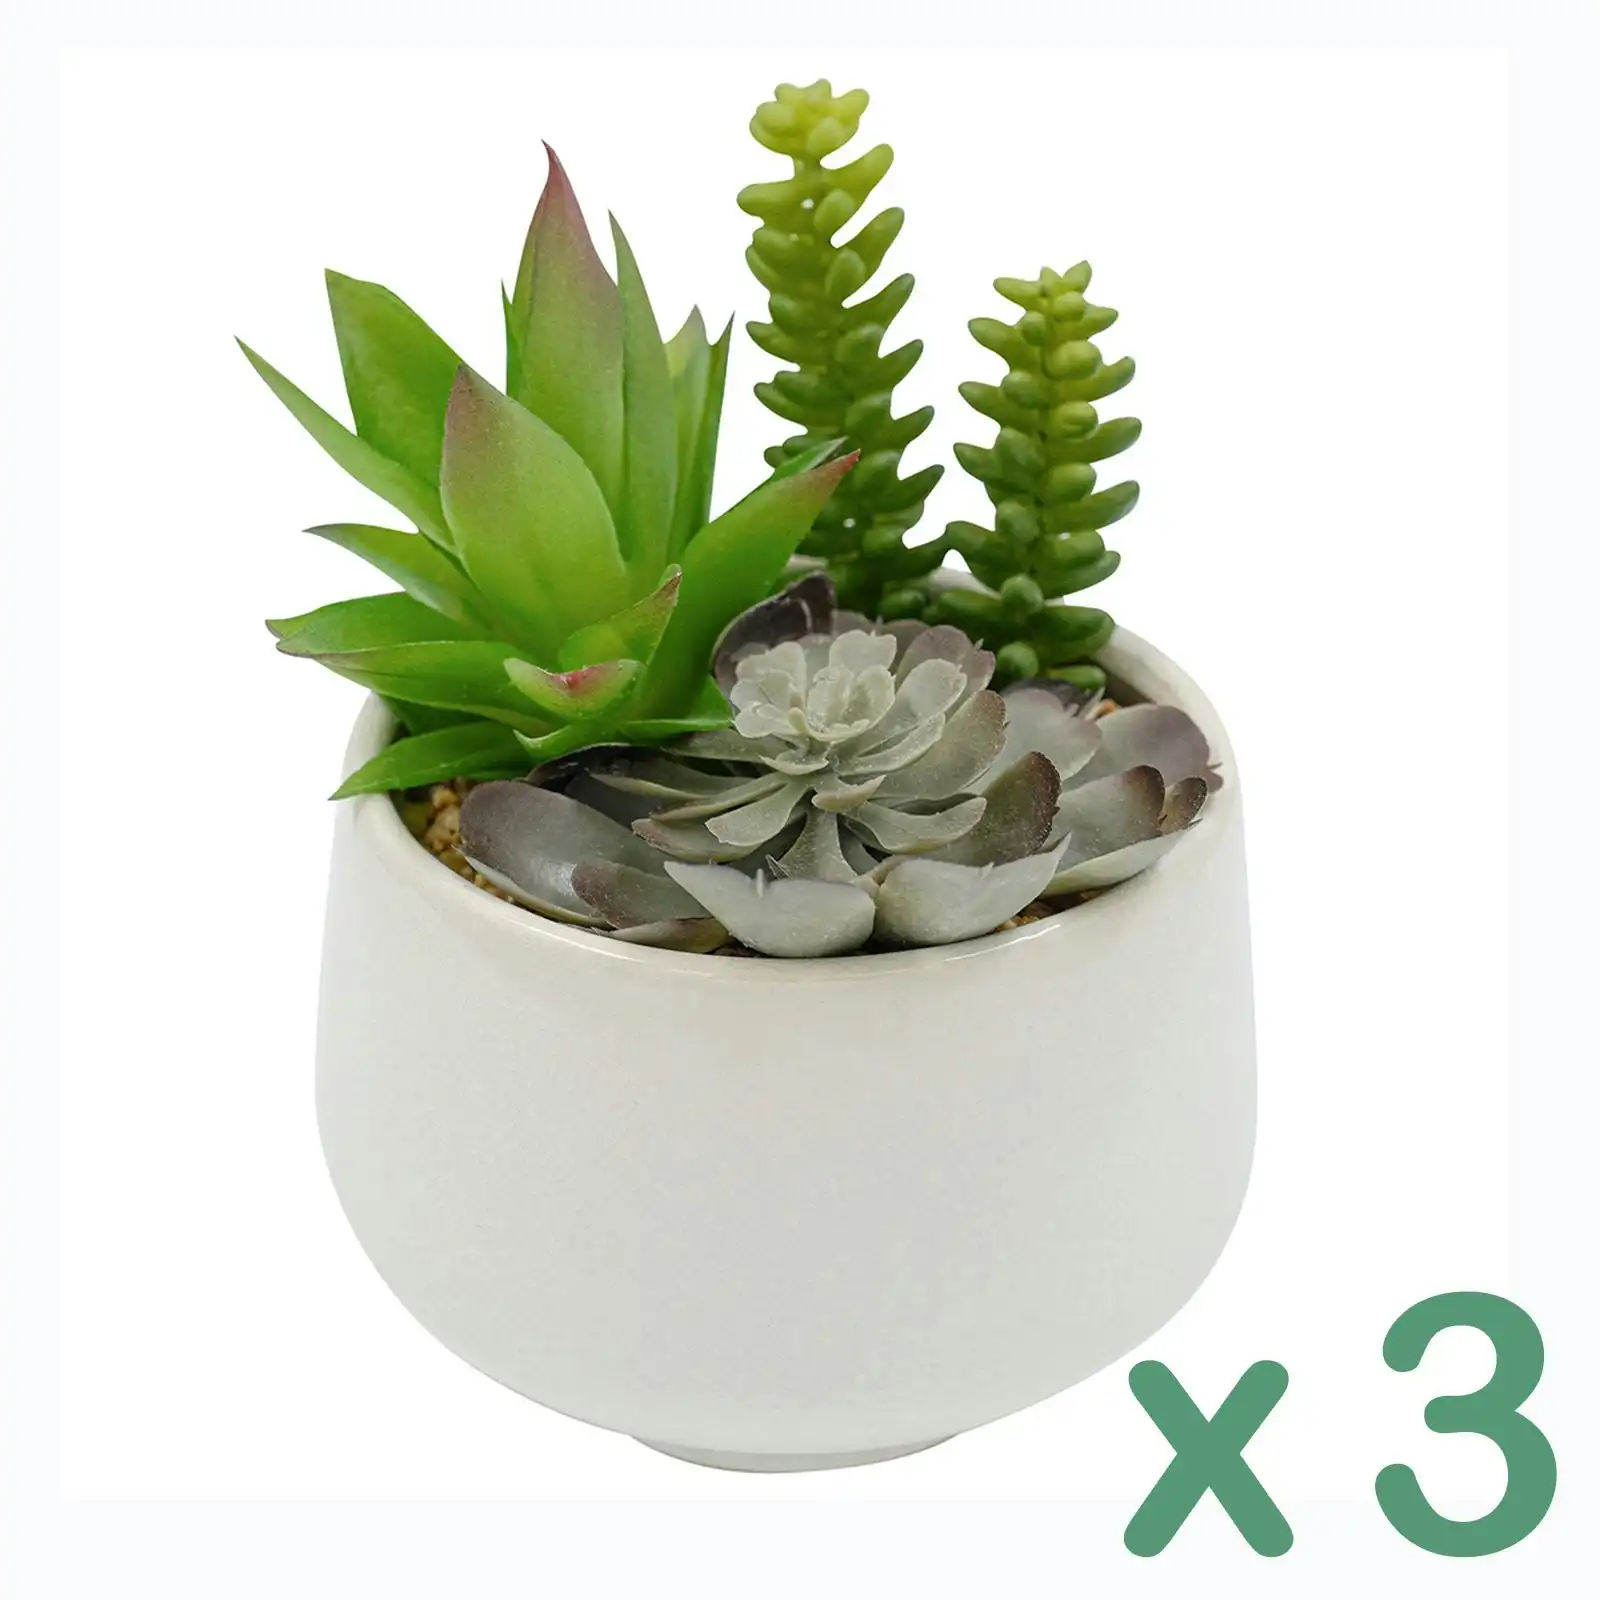 3 pots of Artificial Succulents - Trio in White Pot 19cm